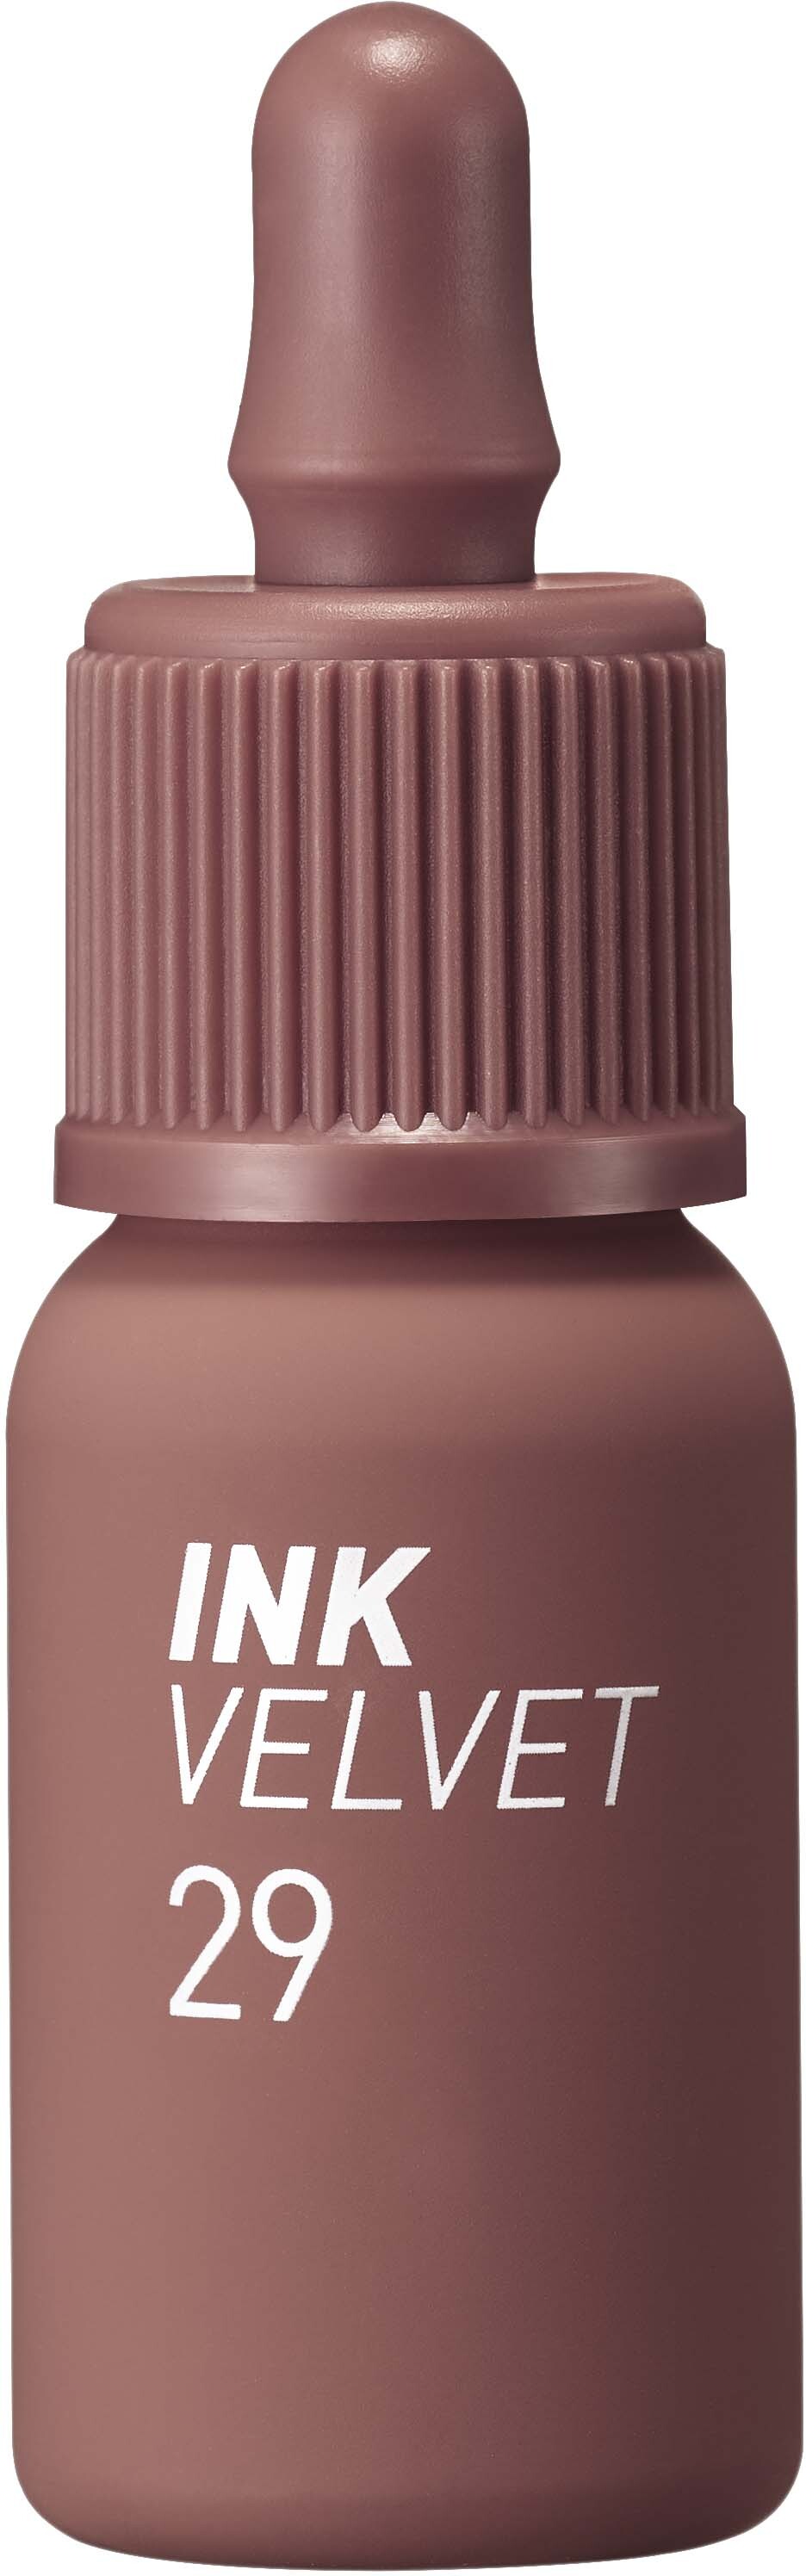 Peripera Ink Velvet 29 Cocoa Nude